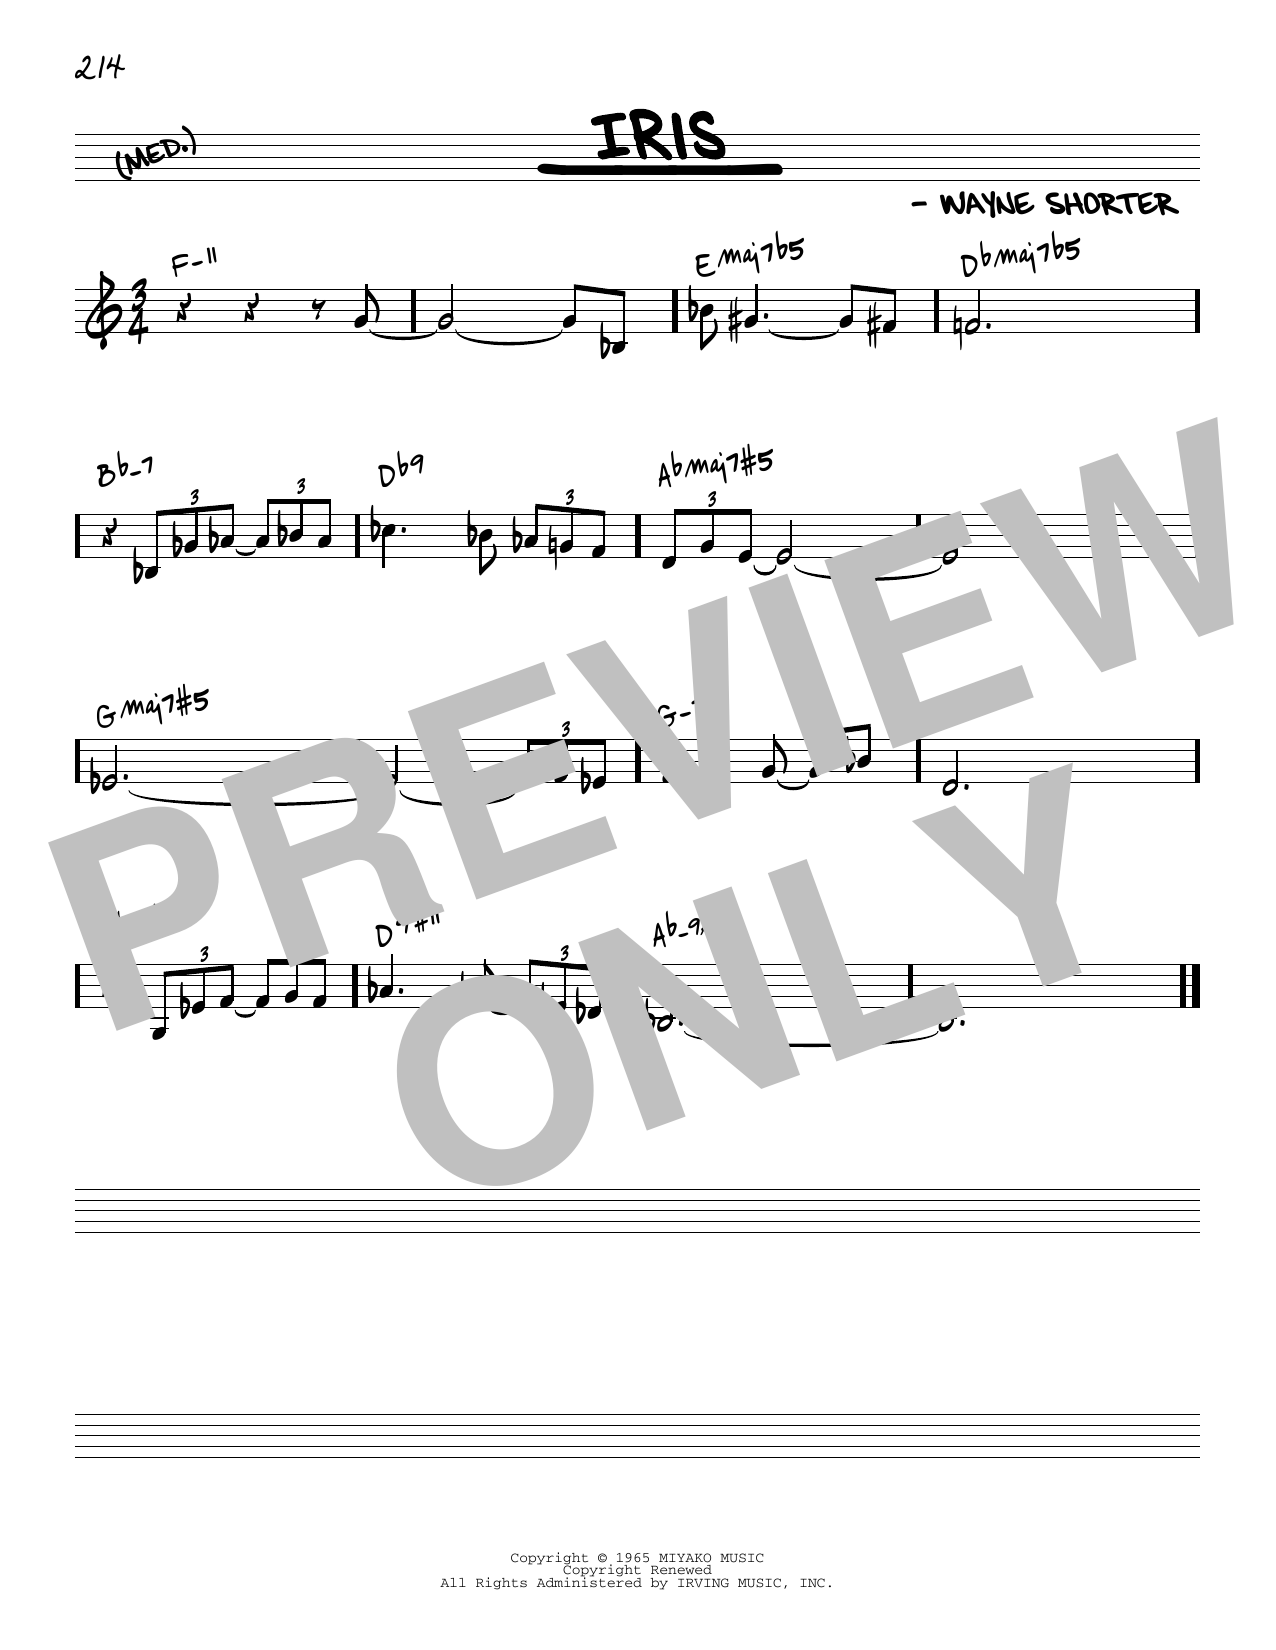 Download Wayne Shorter Iris [Reharmonized version] (arr. Jack Sheet Music